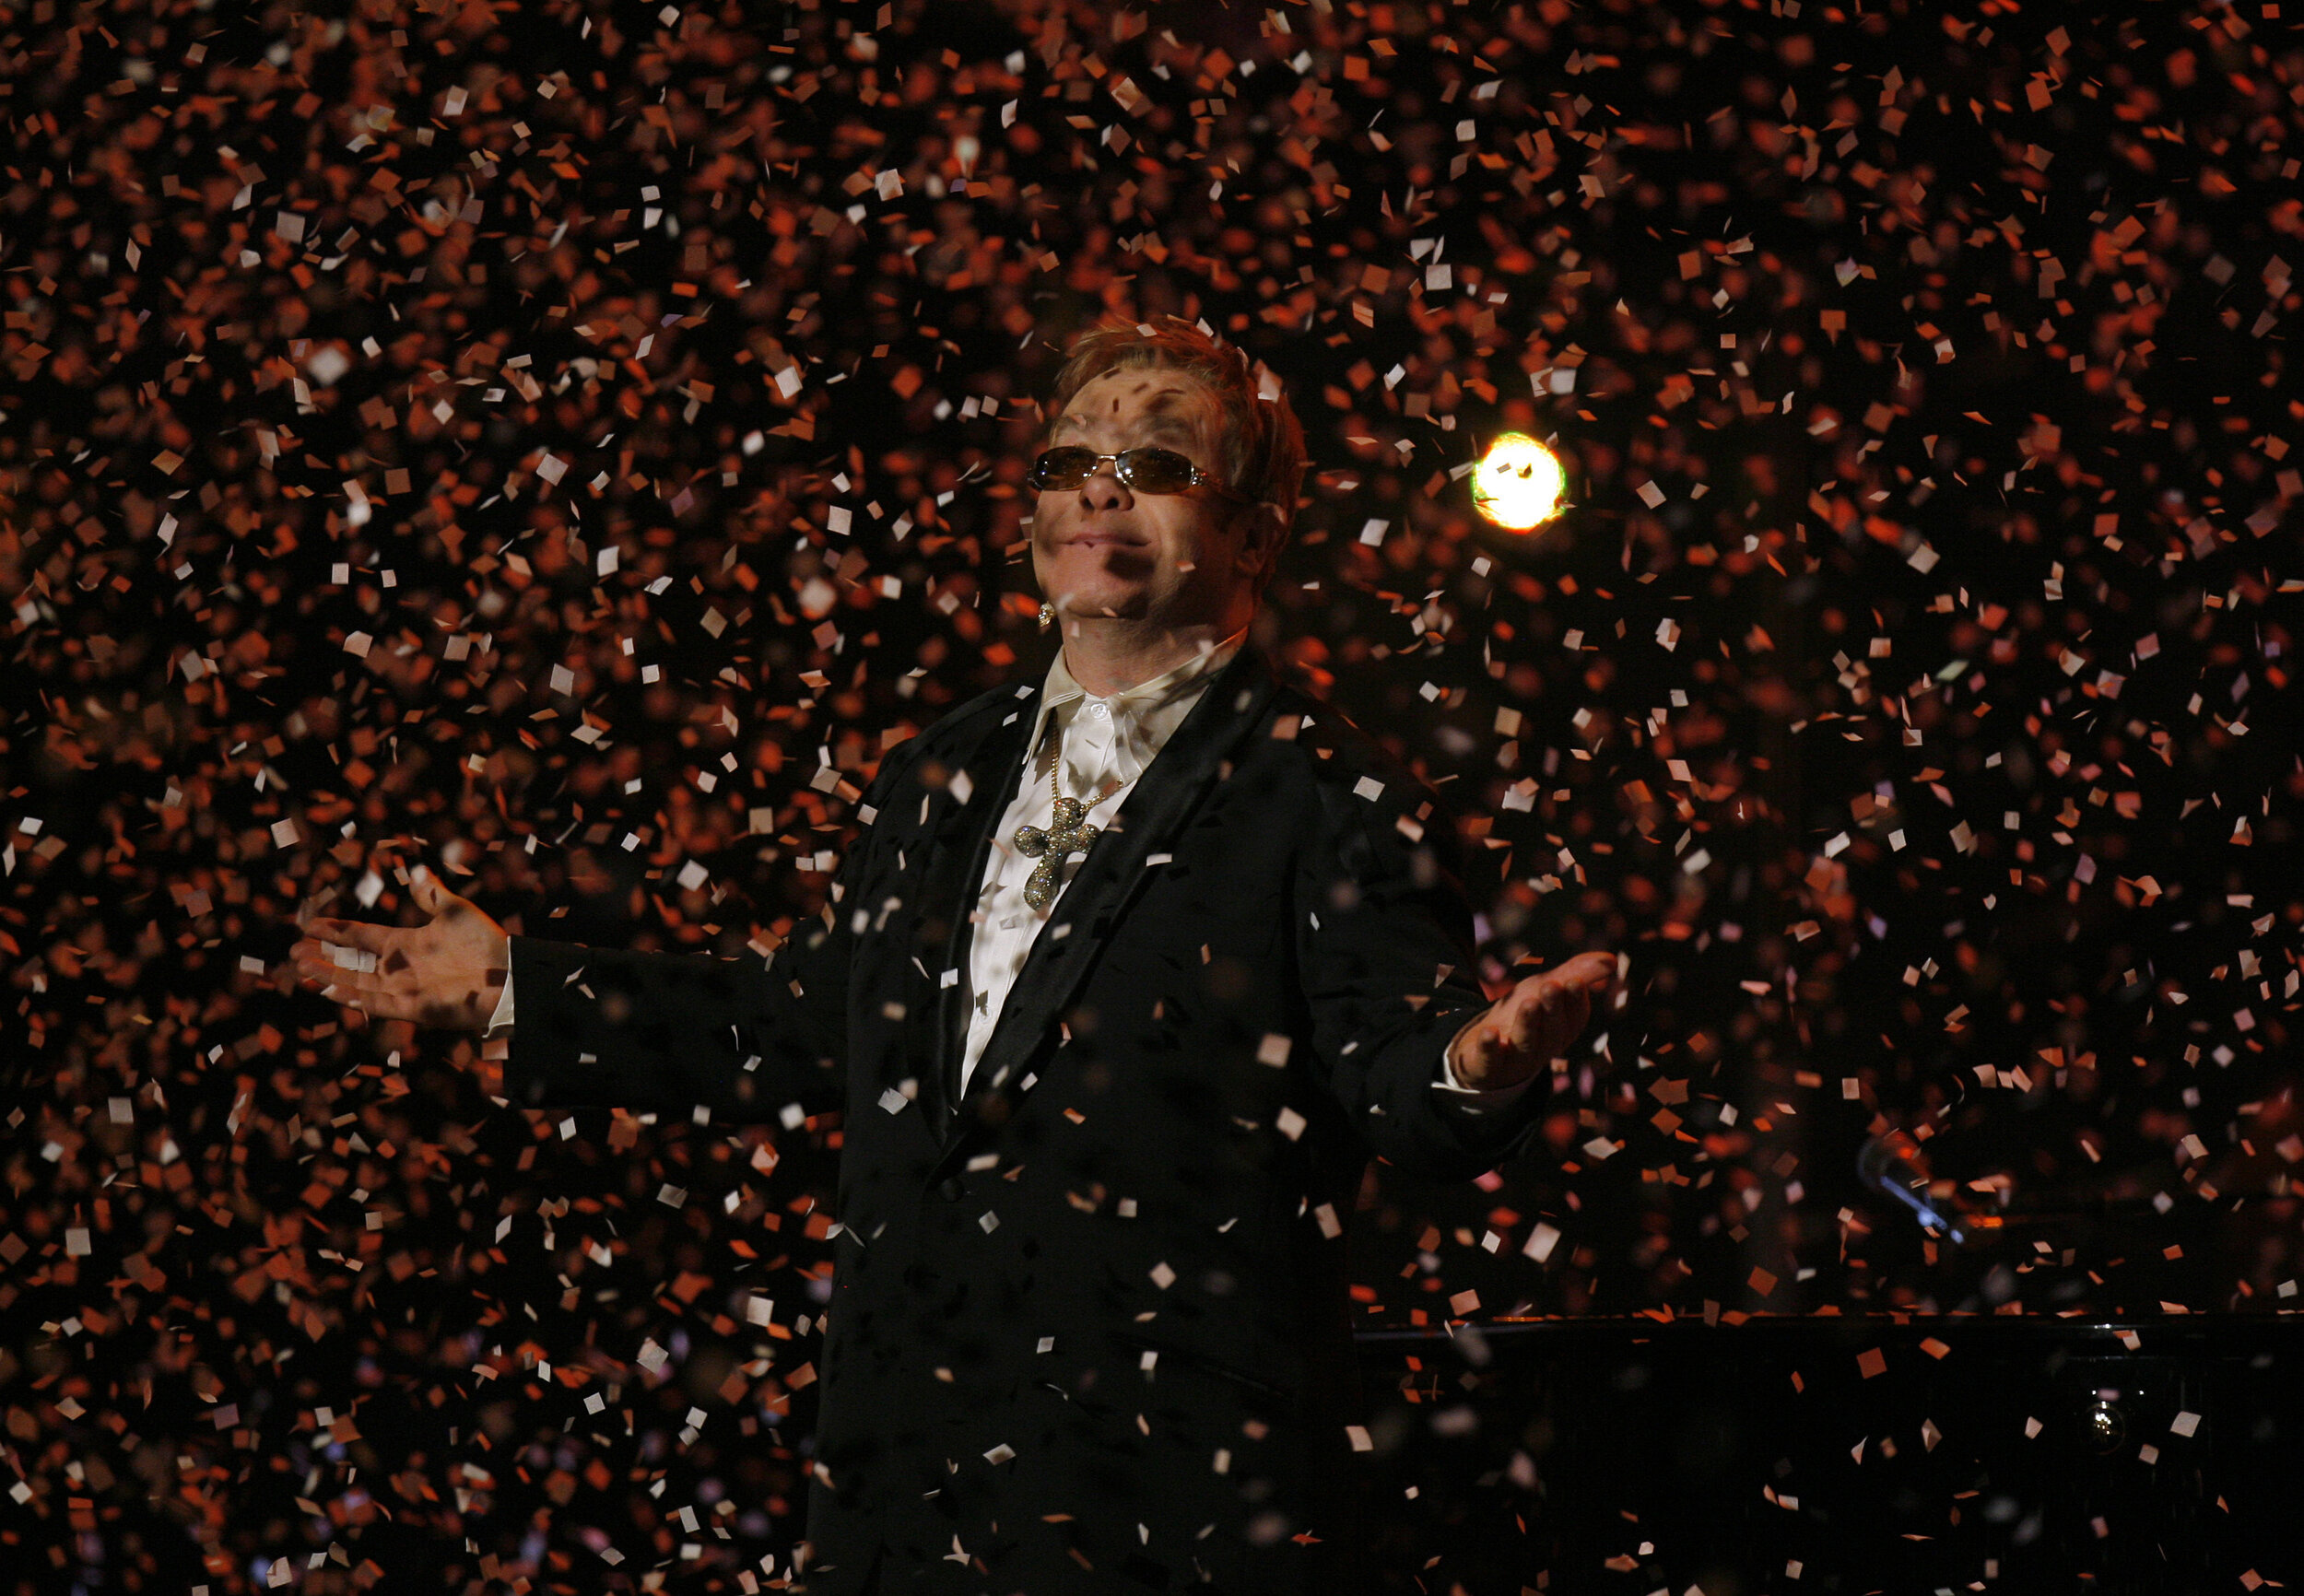   Elton John, 60th performance at Madison Square Garden on his 60th birthday. New York, NY 2007  